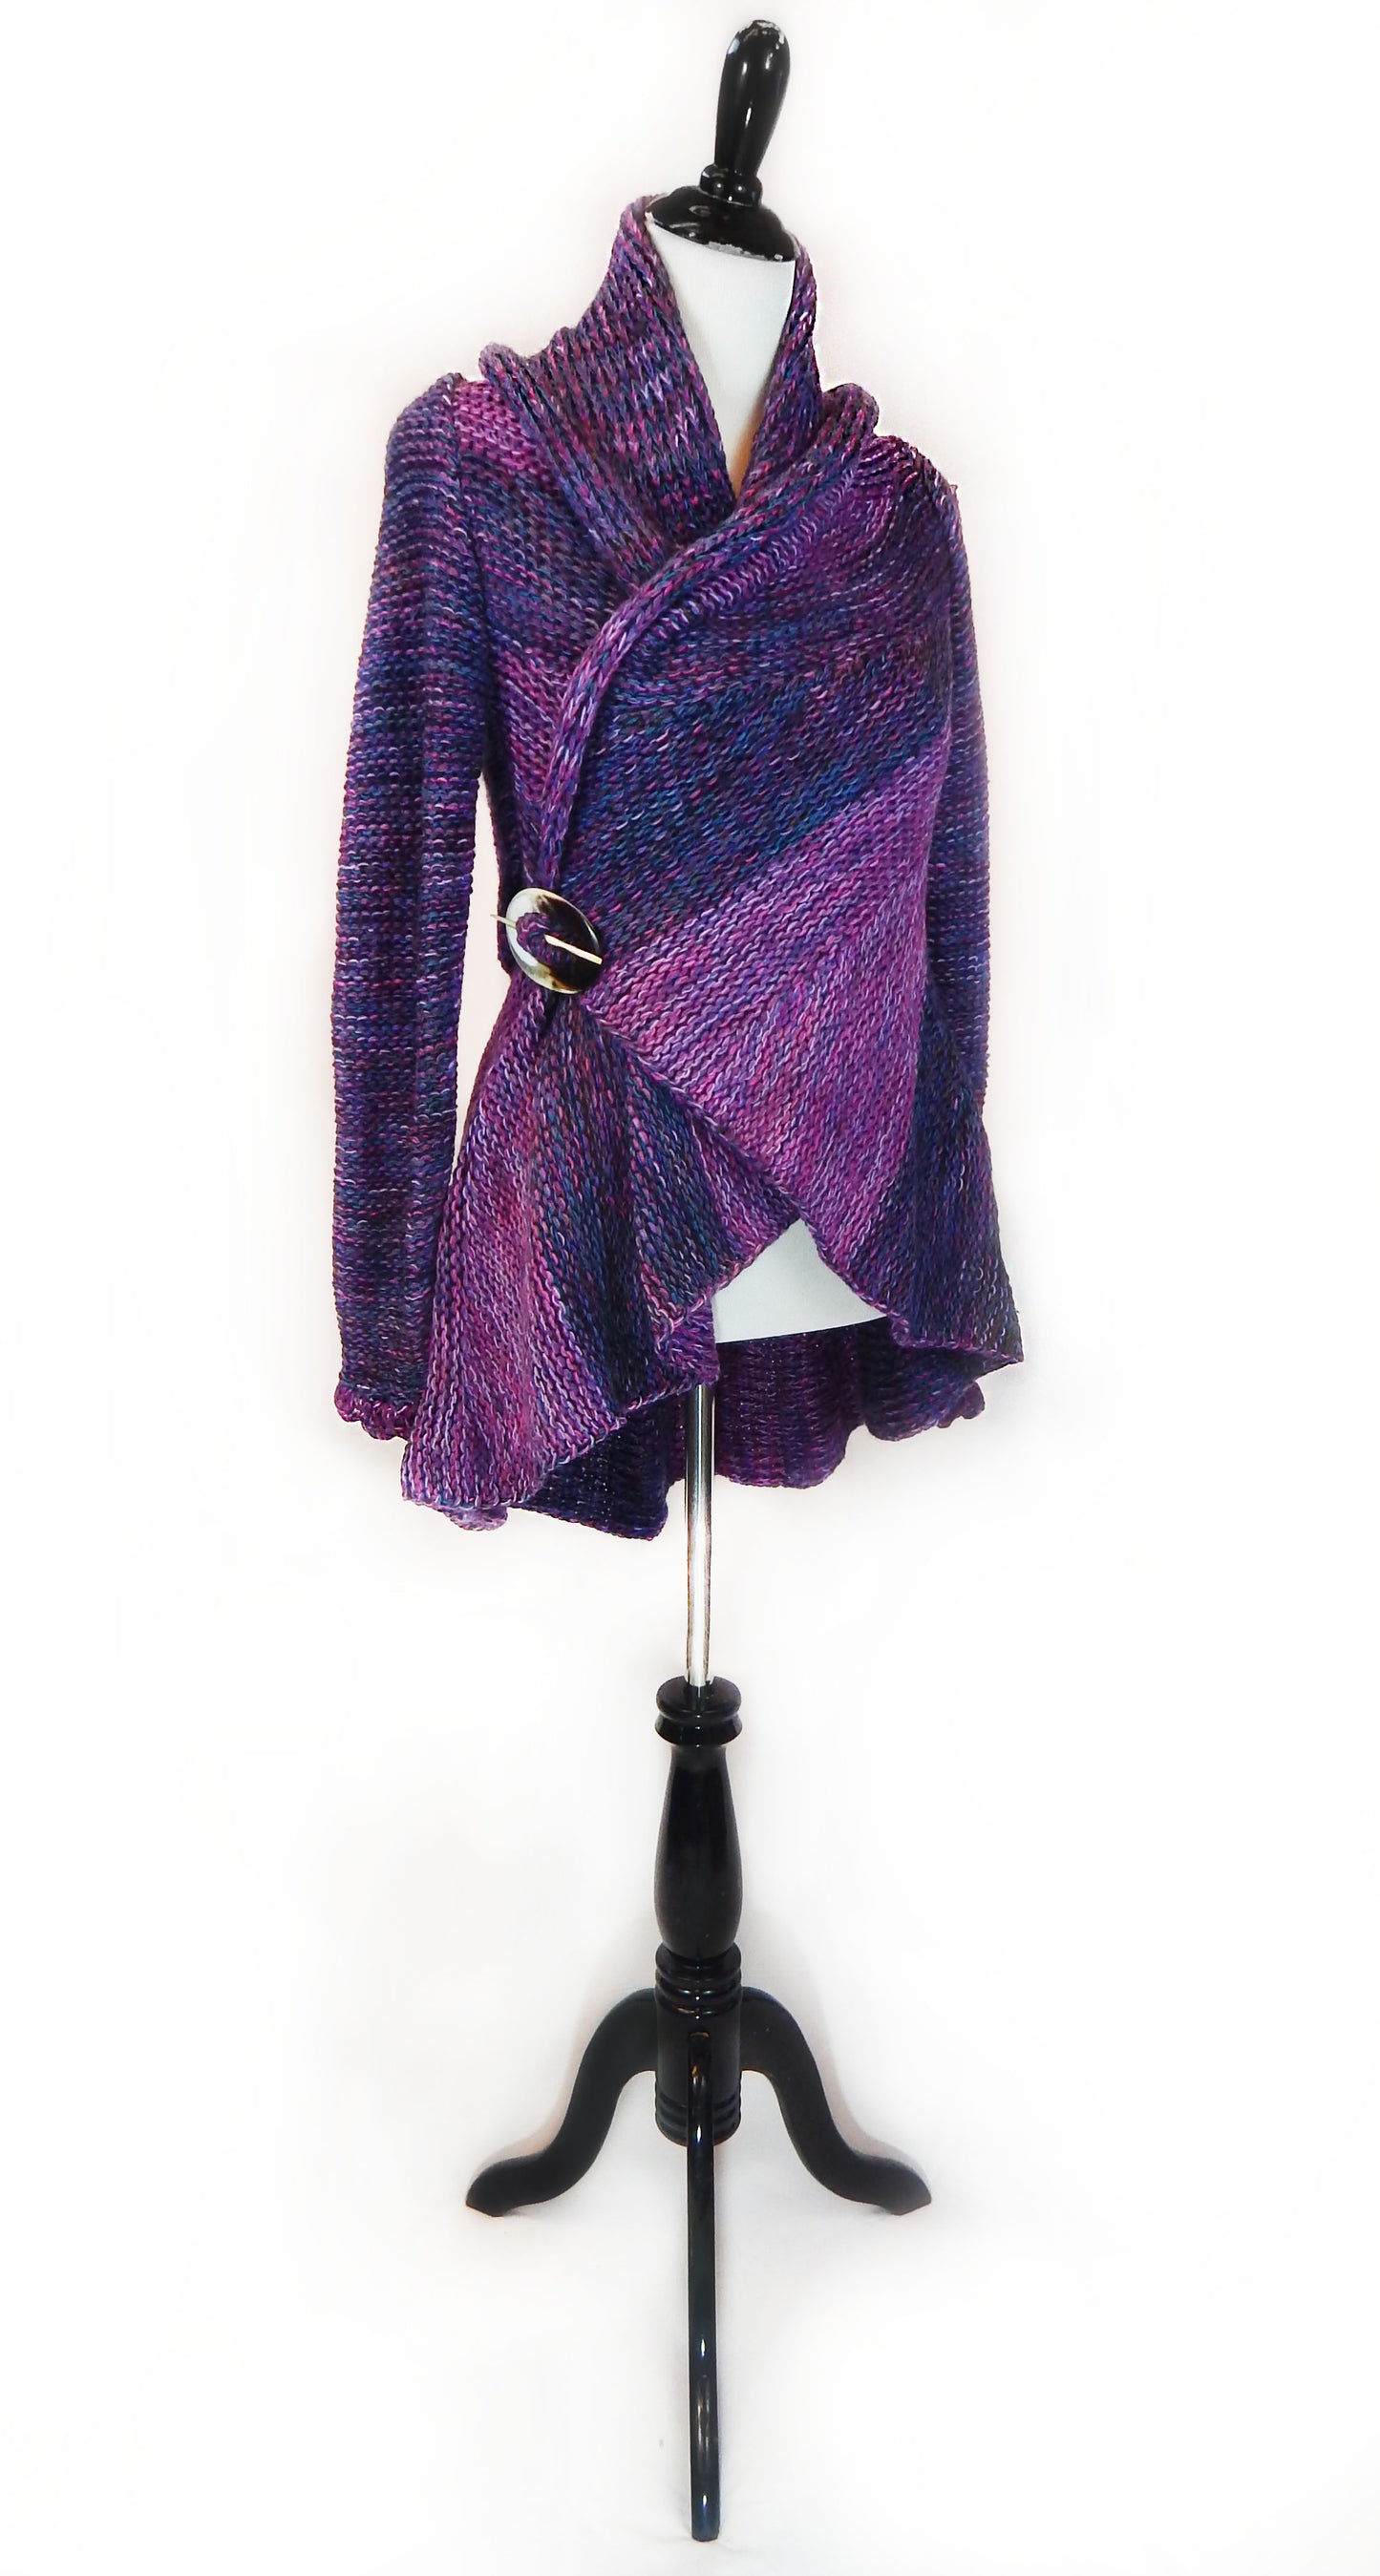 Fine Alpaca Wool Tailored Knit Peacoat Cardigan Sweater Open Versatile Stylish Elegant Fitted Wrap Crochet Sleeve Purple Violet Shades